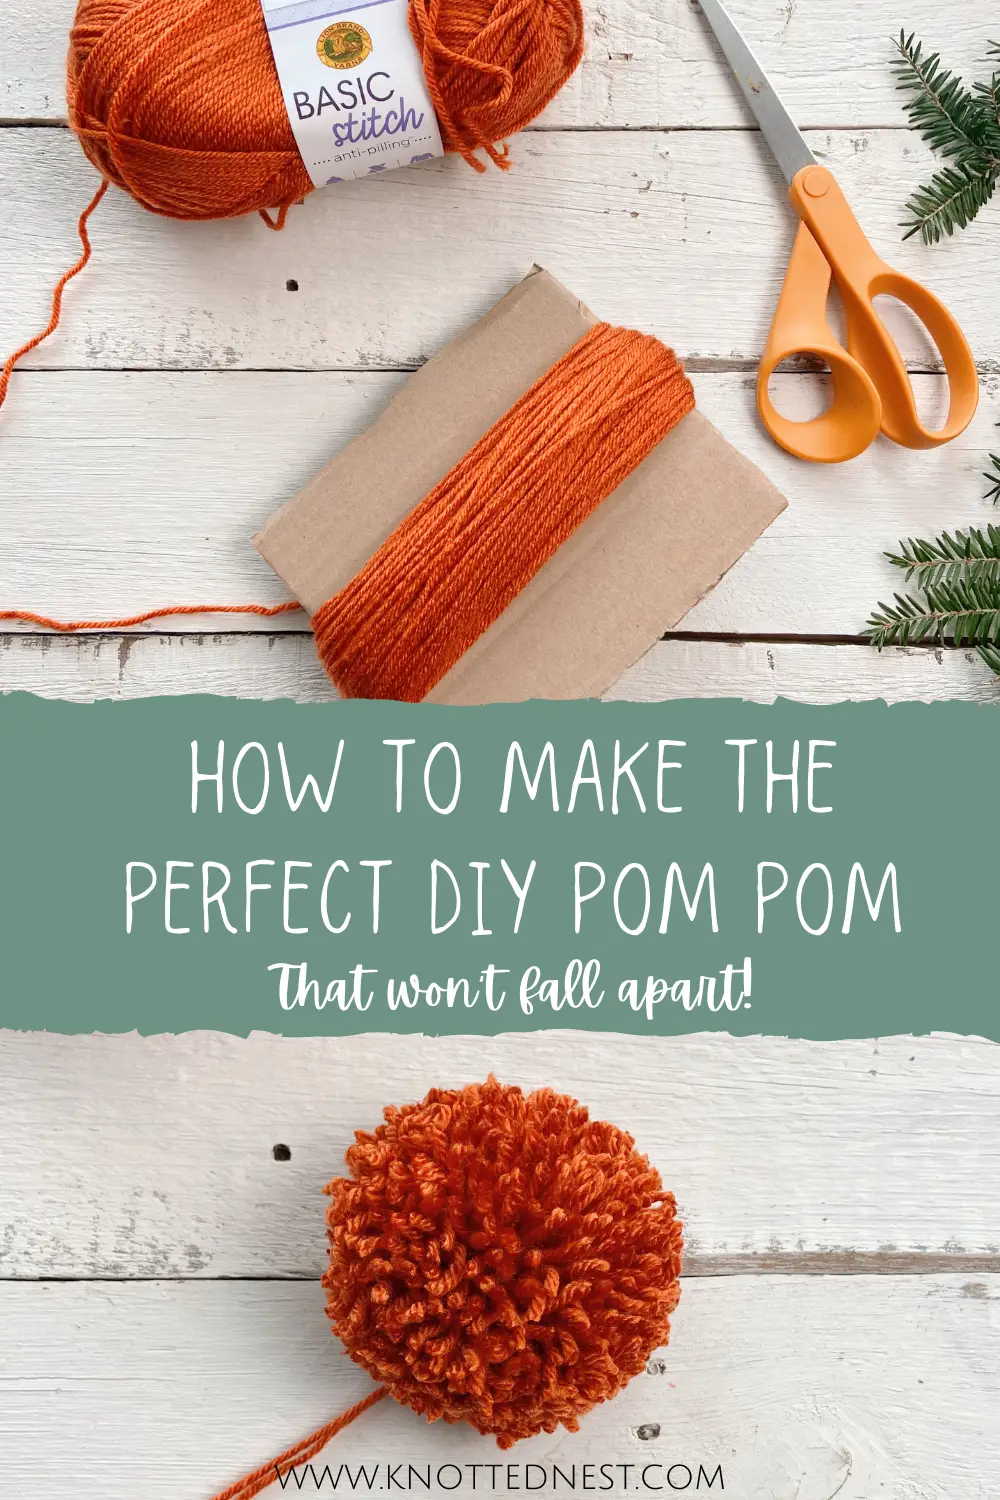 How to Make a Pom Pom That Won't Fall Apart!